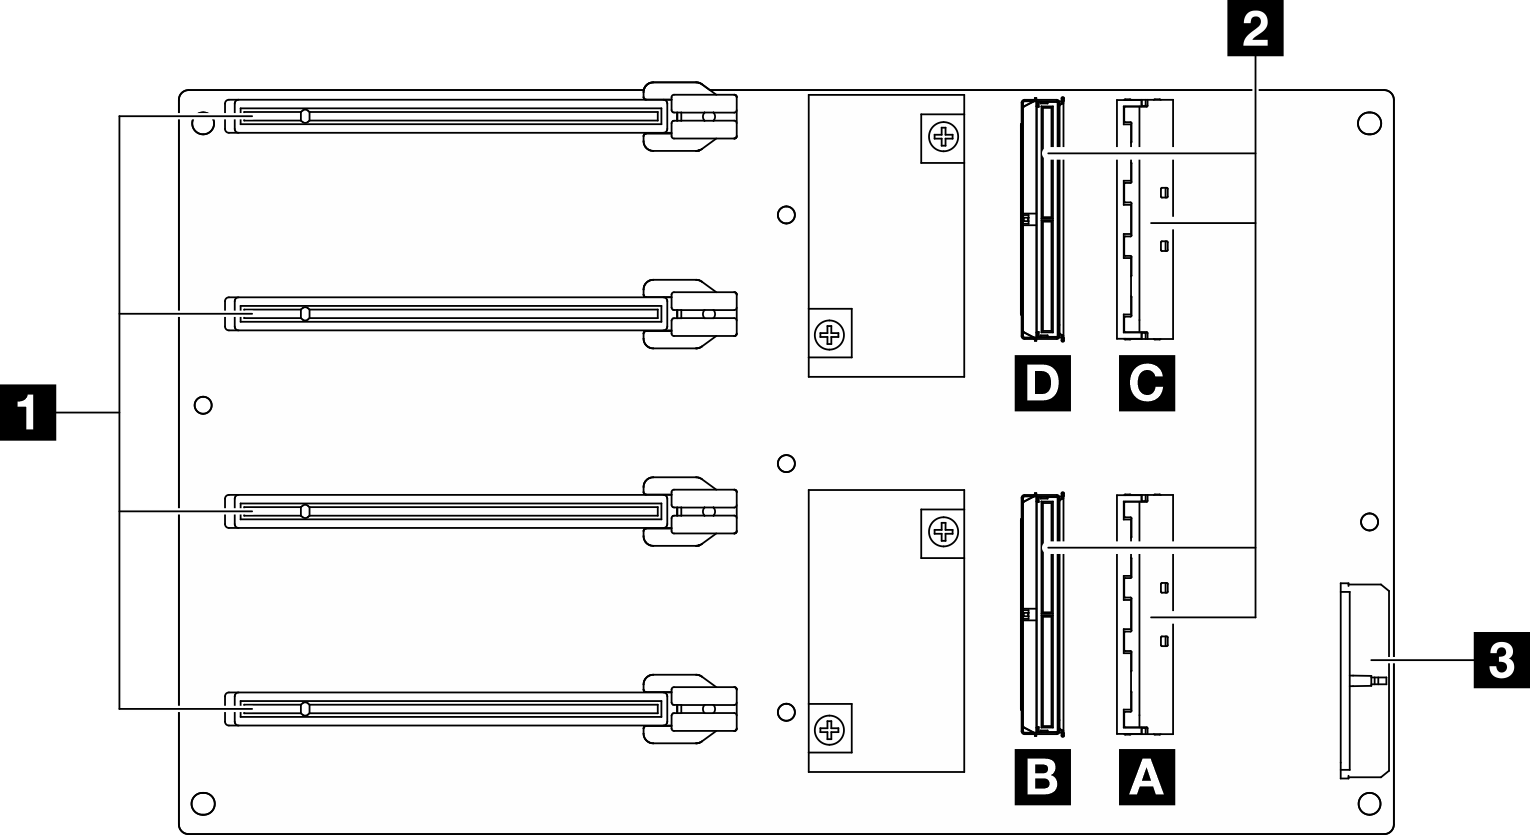 Direct GPU distribution board connectors